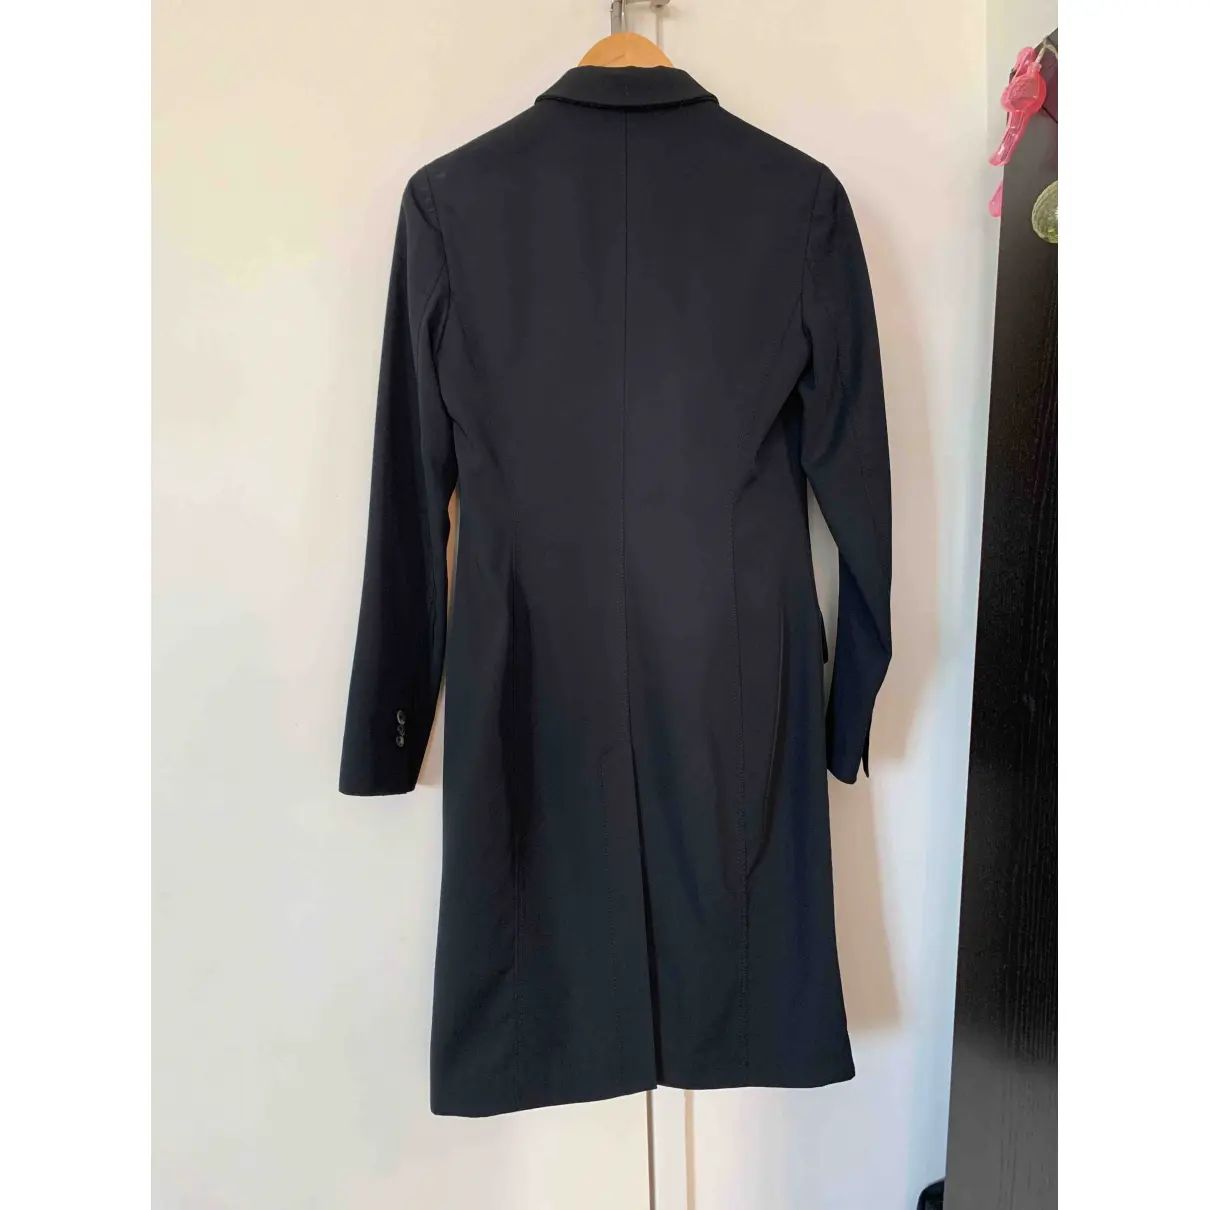 Buy The Row Trench coat online